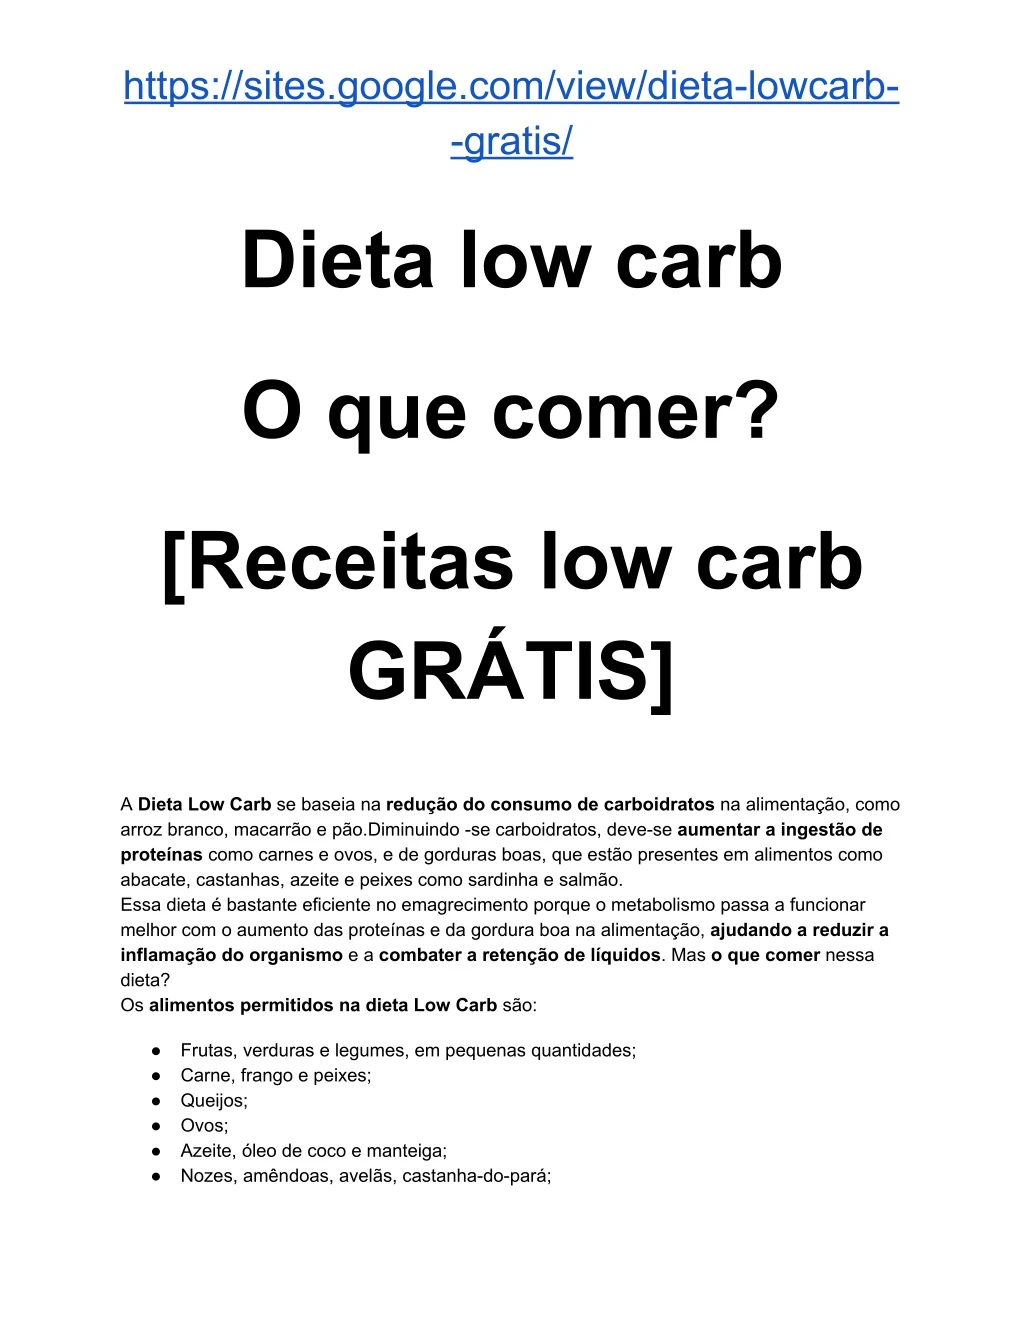 https sites google com view dieta lowcarb gratis